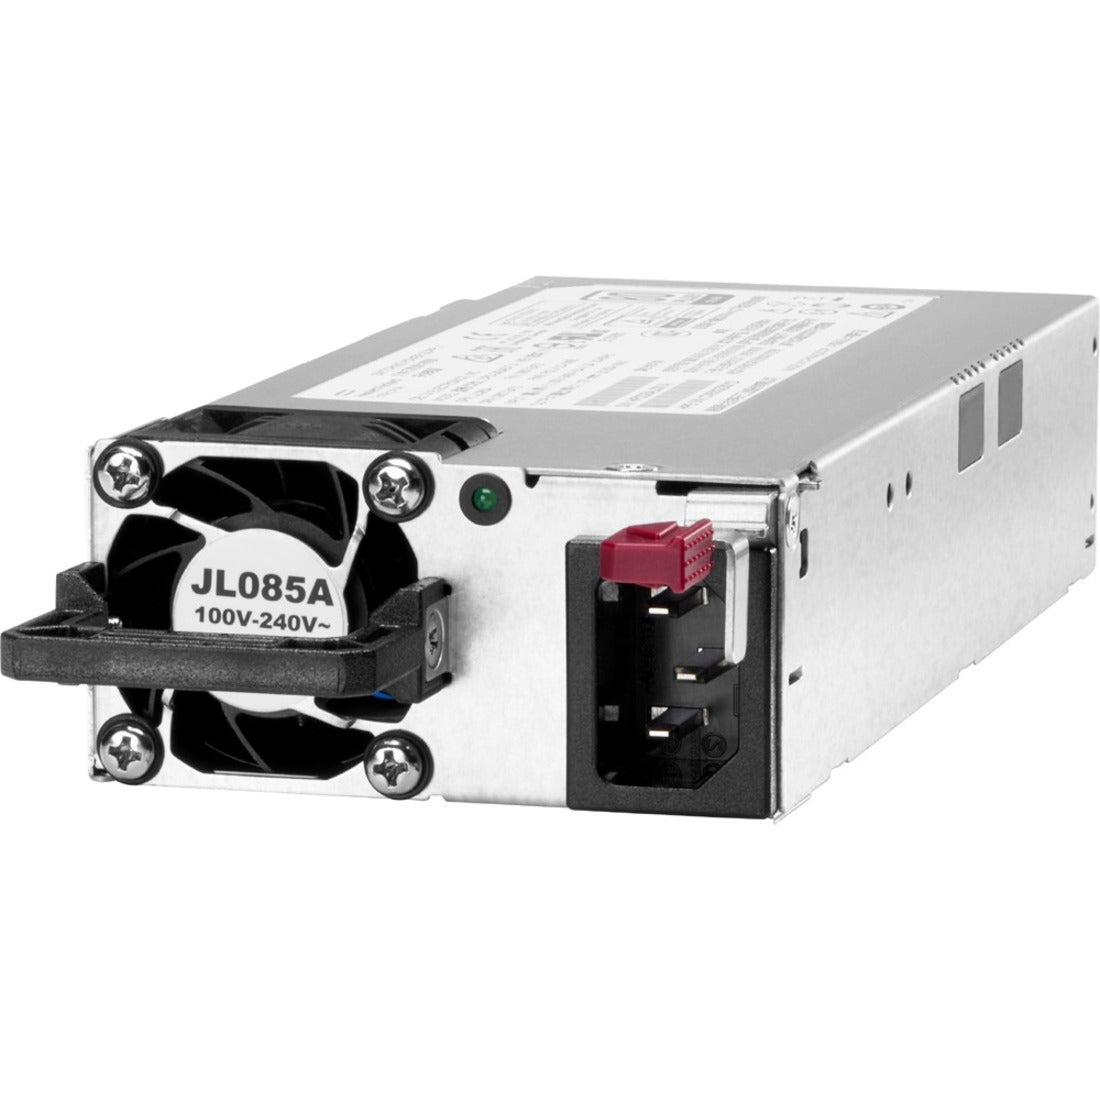 HPE Sourcing Aruba X371 12VDC 250W 100-240VAC Power Supply (JL085A)